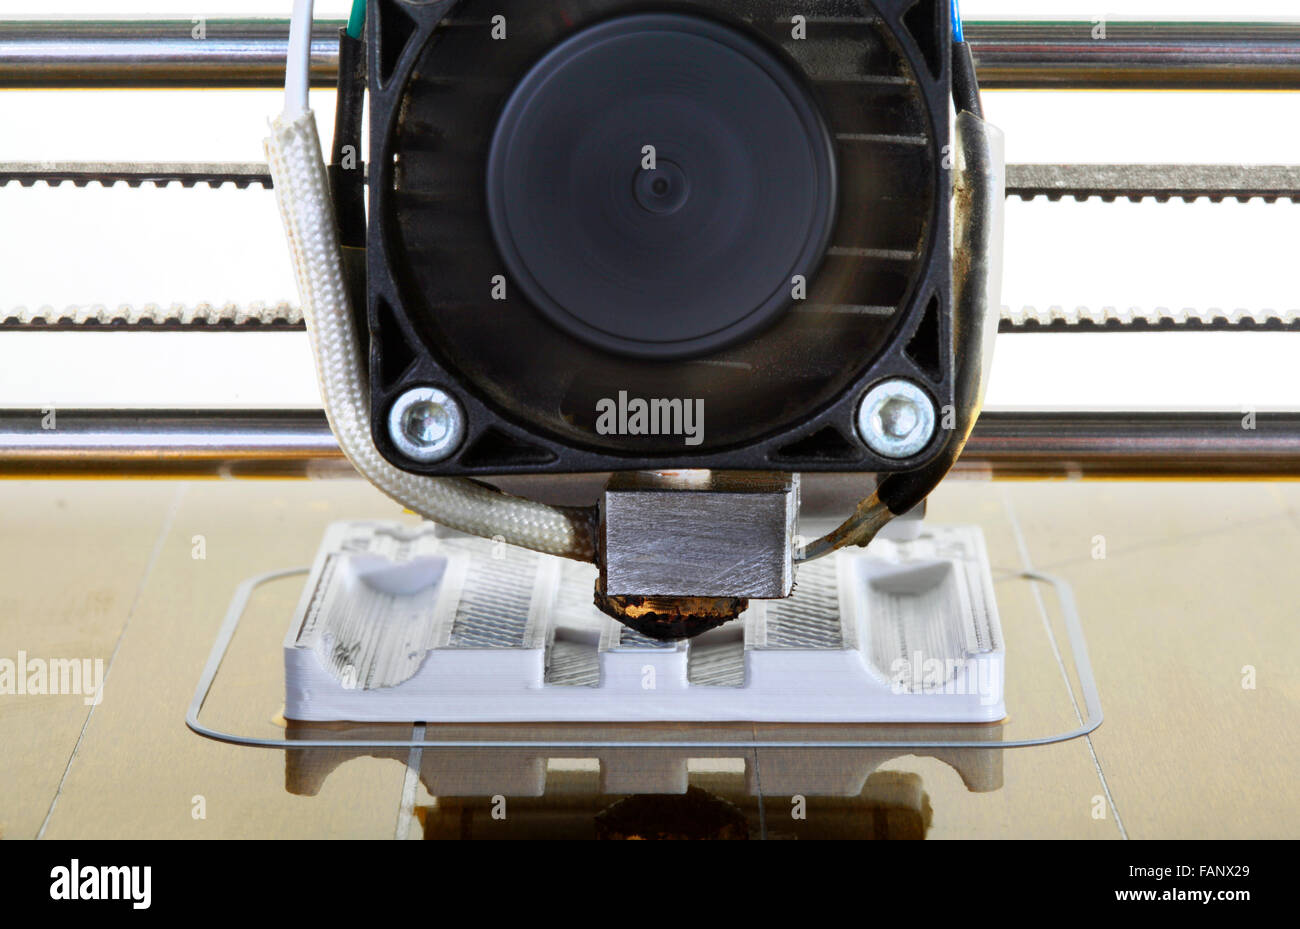 Printing Plastic Part Prototype with 3D Printer Stock Photo